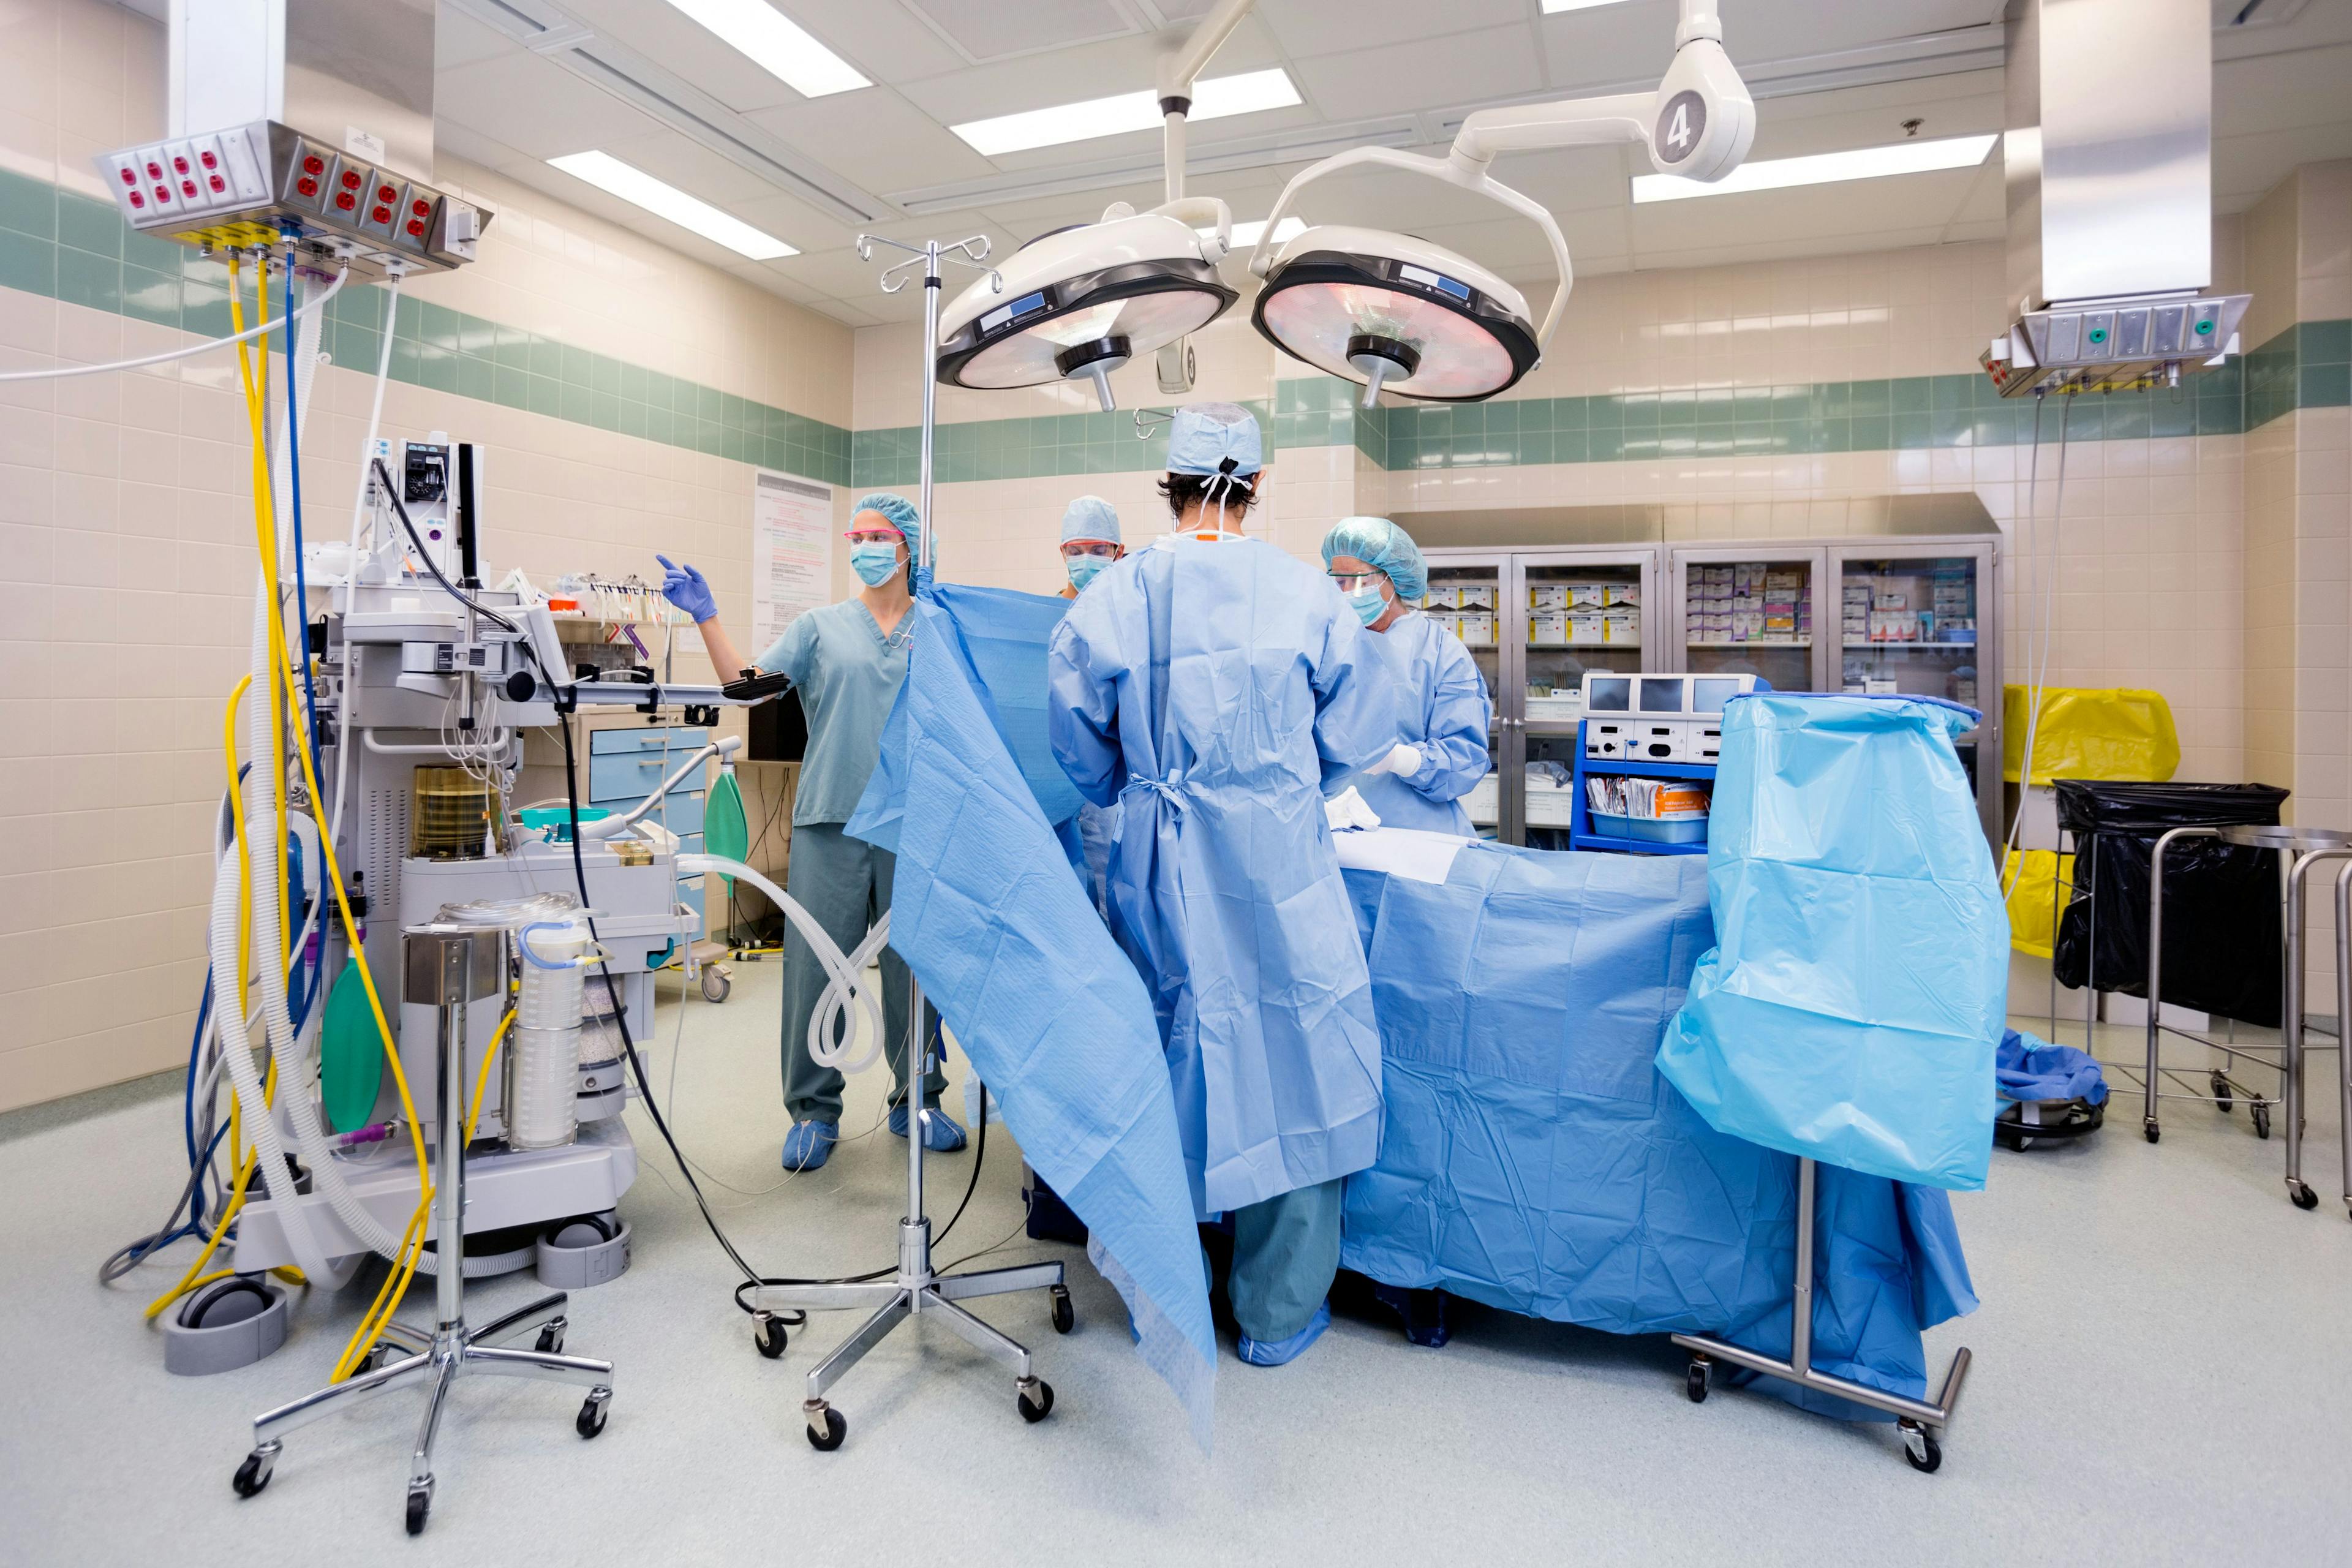 Surgical team in operating room | Image credit: ©Tyler Olsen  stock.adobe.com